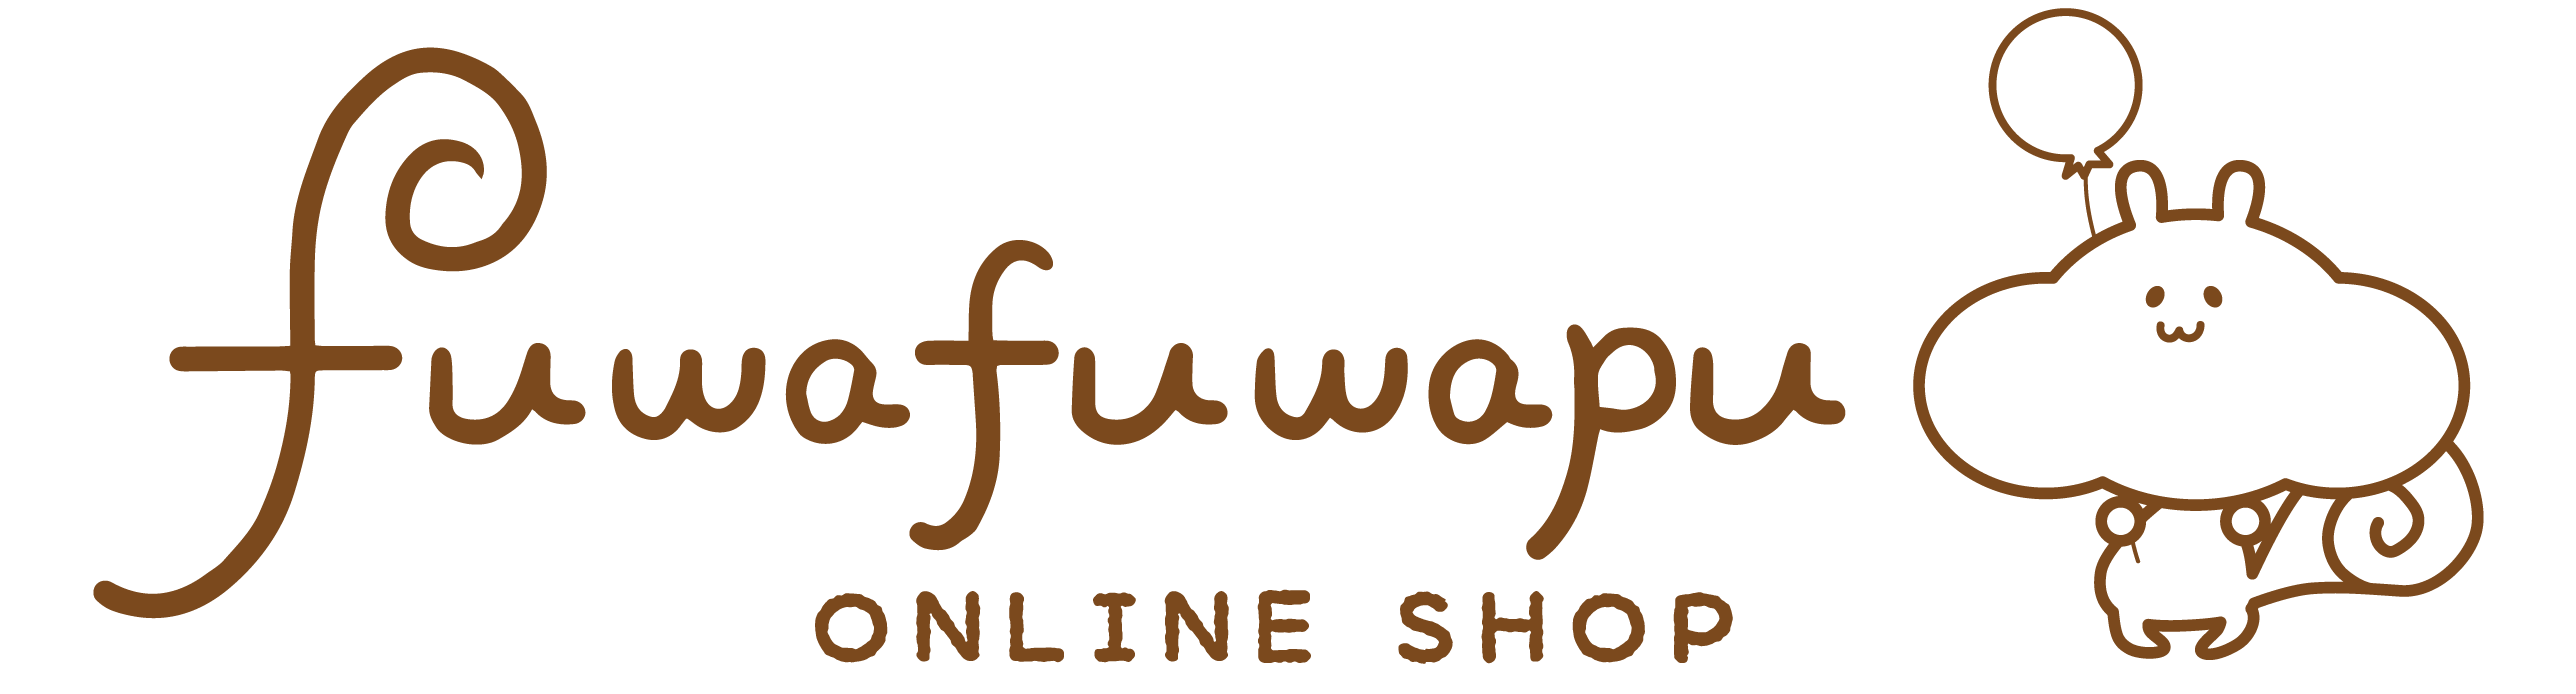 fuwafuwapu